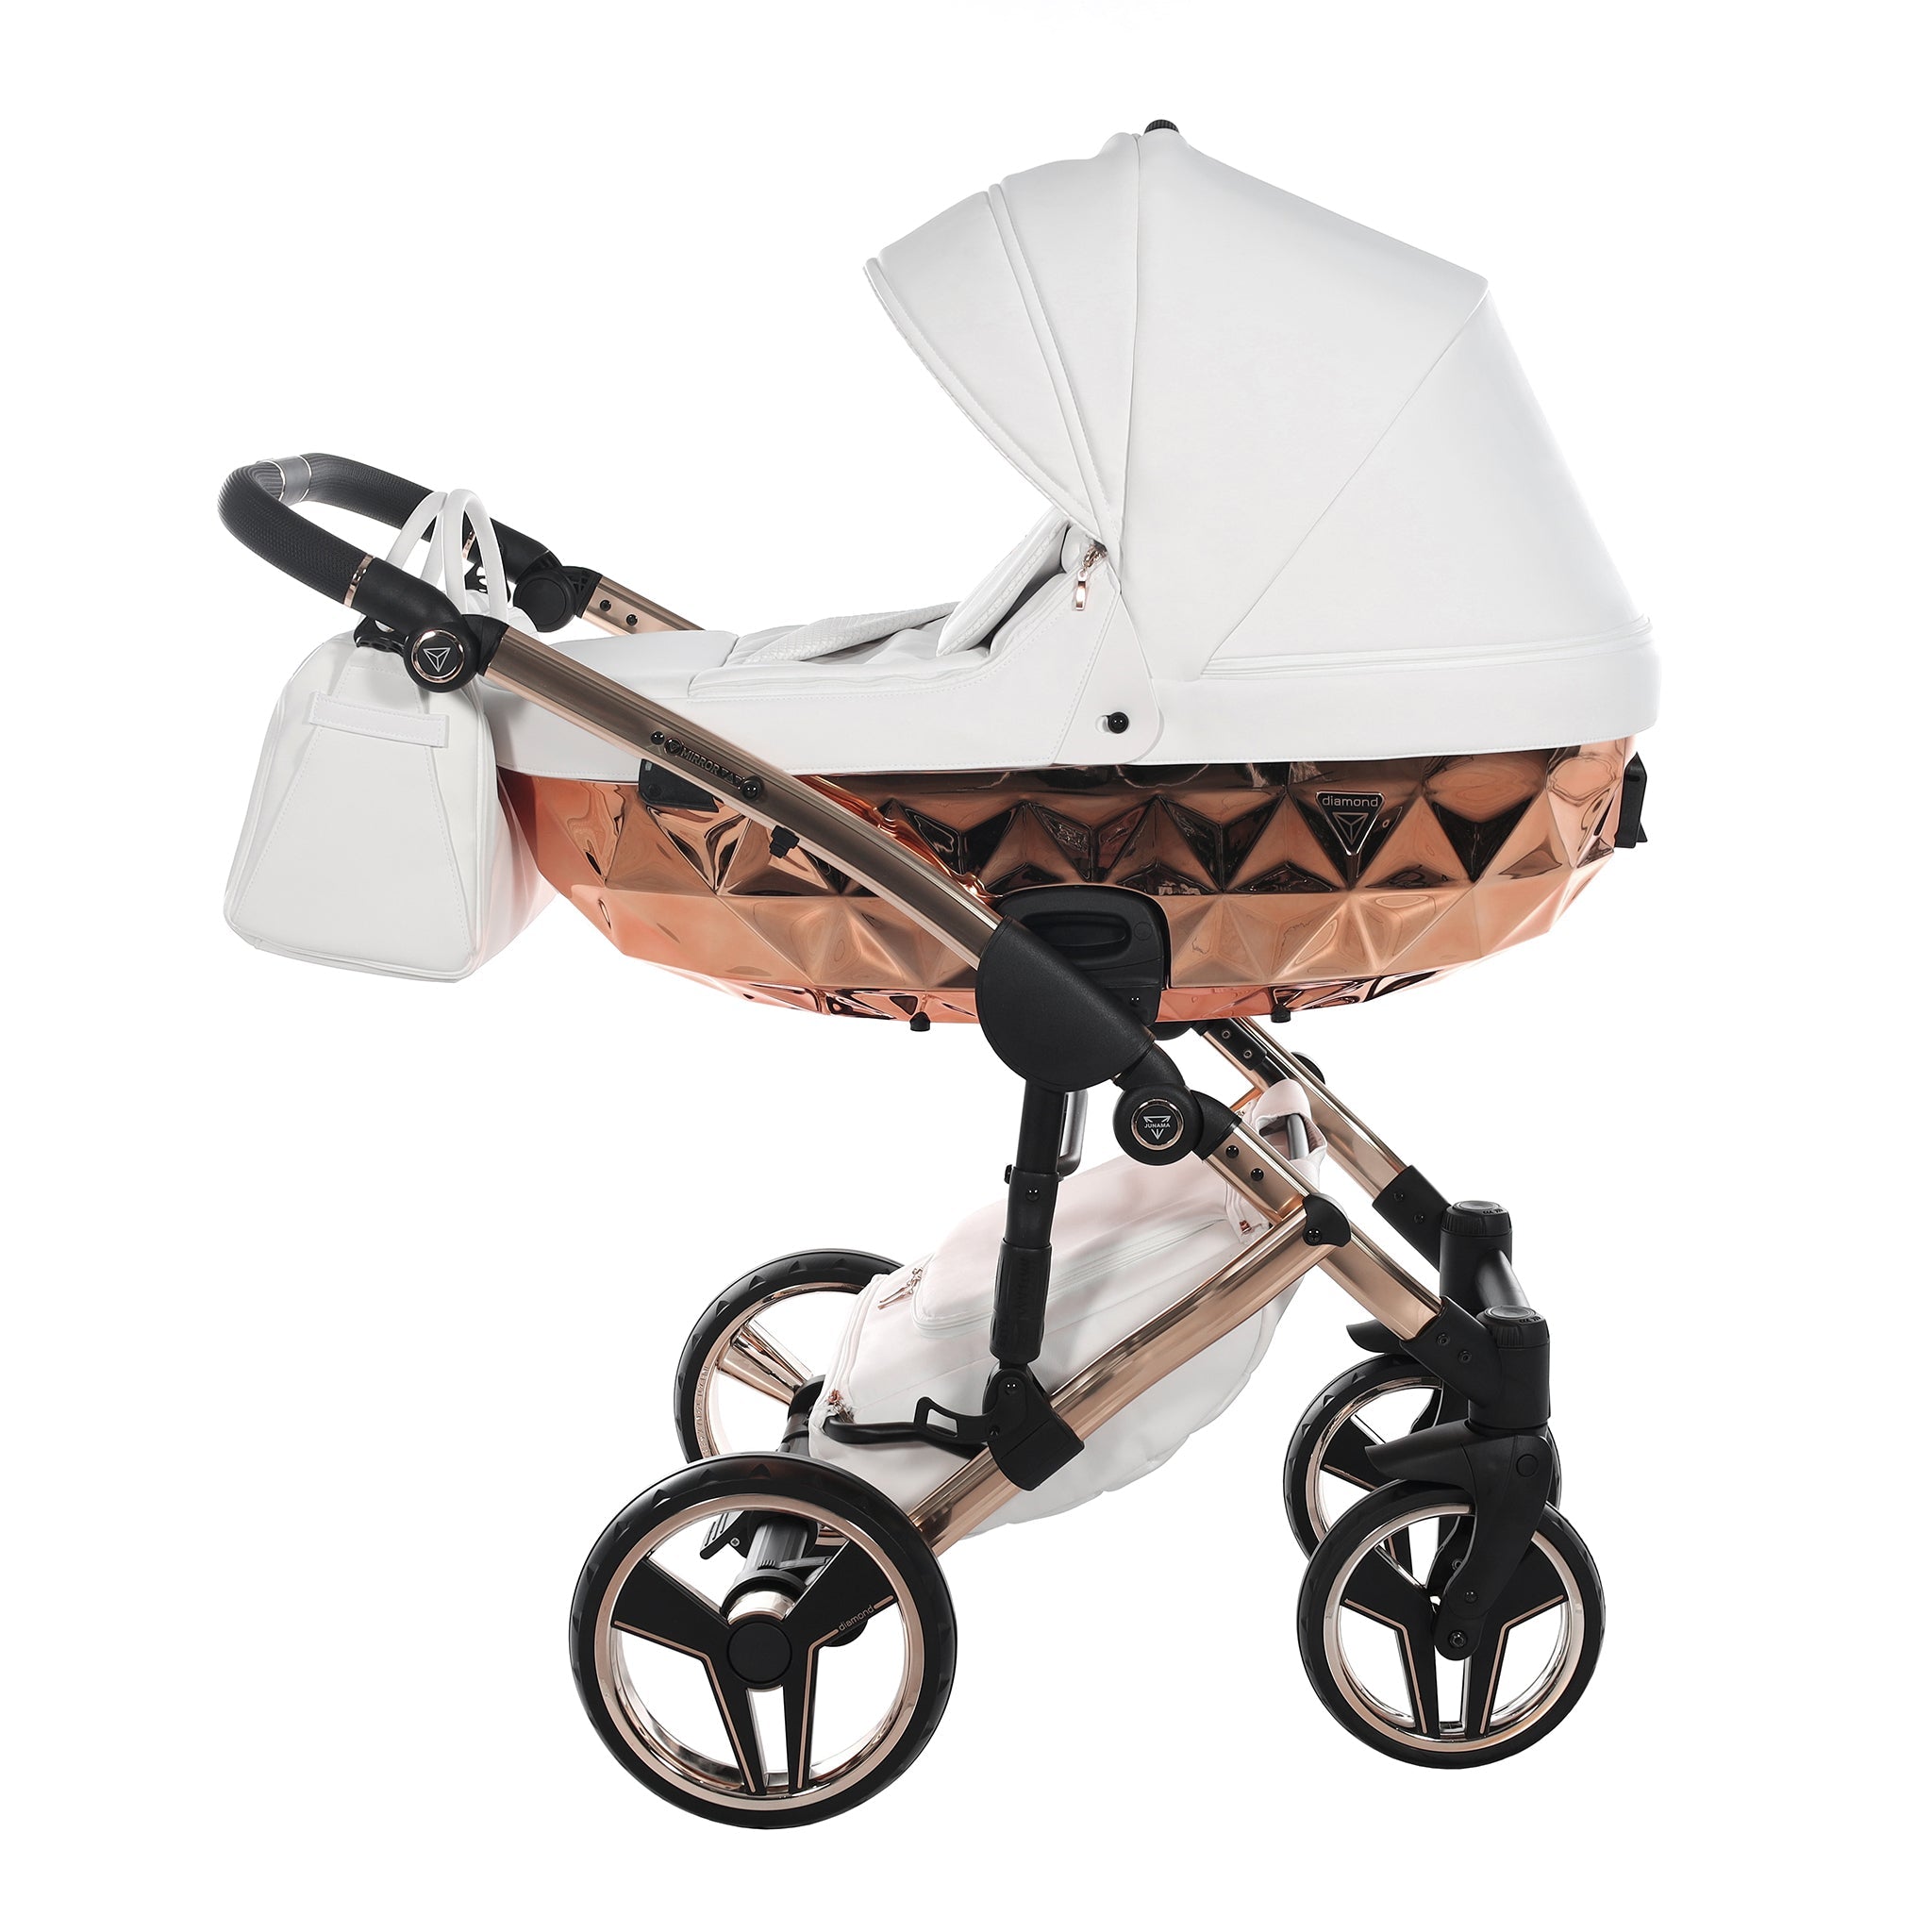 Junama Mirror, baby prams or stroller 2 in 1 - Copper chrome and Rose Gold, Code number: JUNMIR05